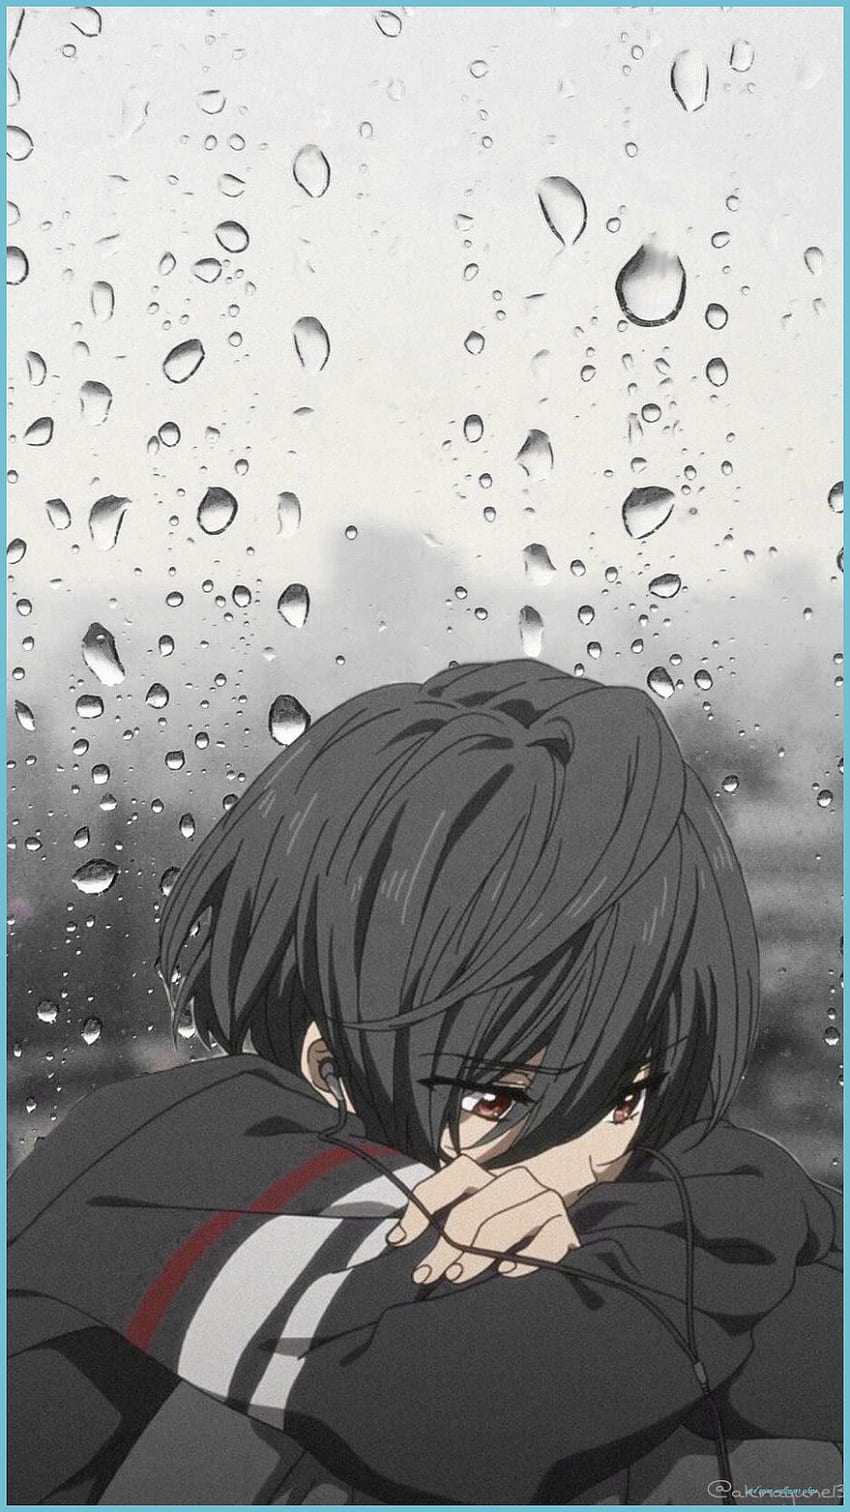 100+] Sad Depressing Anime Wallpapers | Wallpapers.com